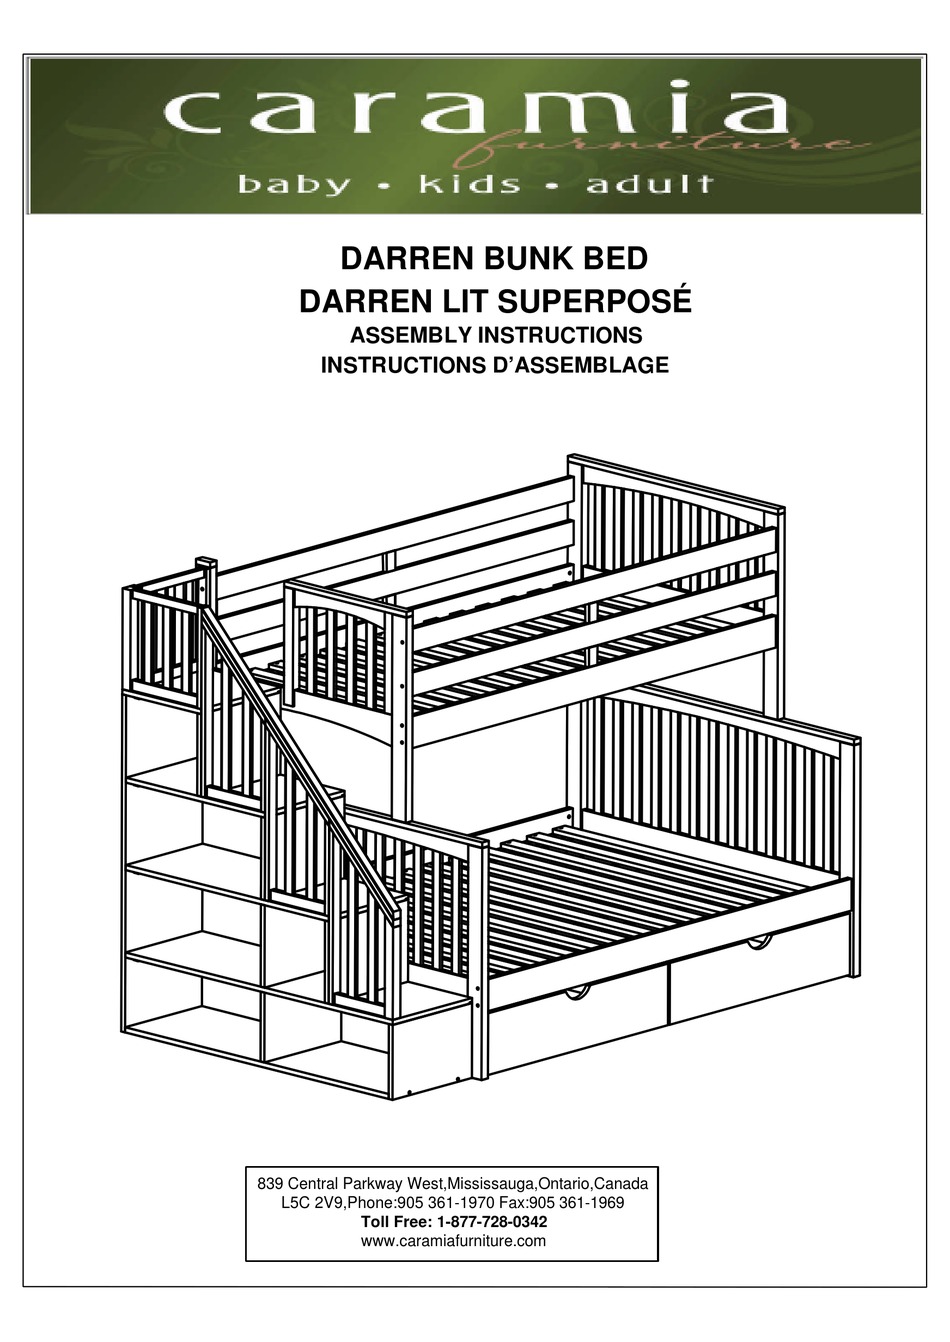 Caramia Bunk Bed Yasserchemicals Com, Caramia Bunk Bed